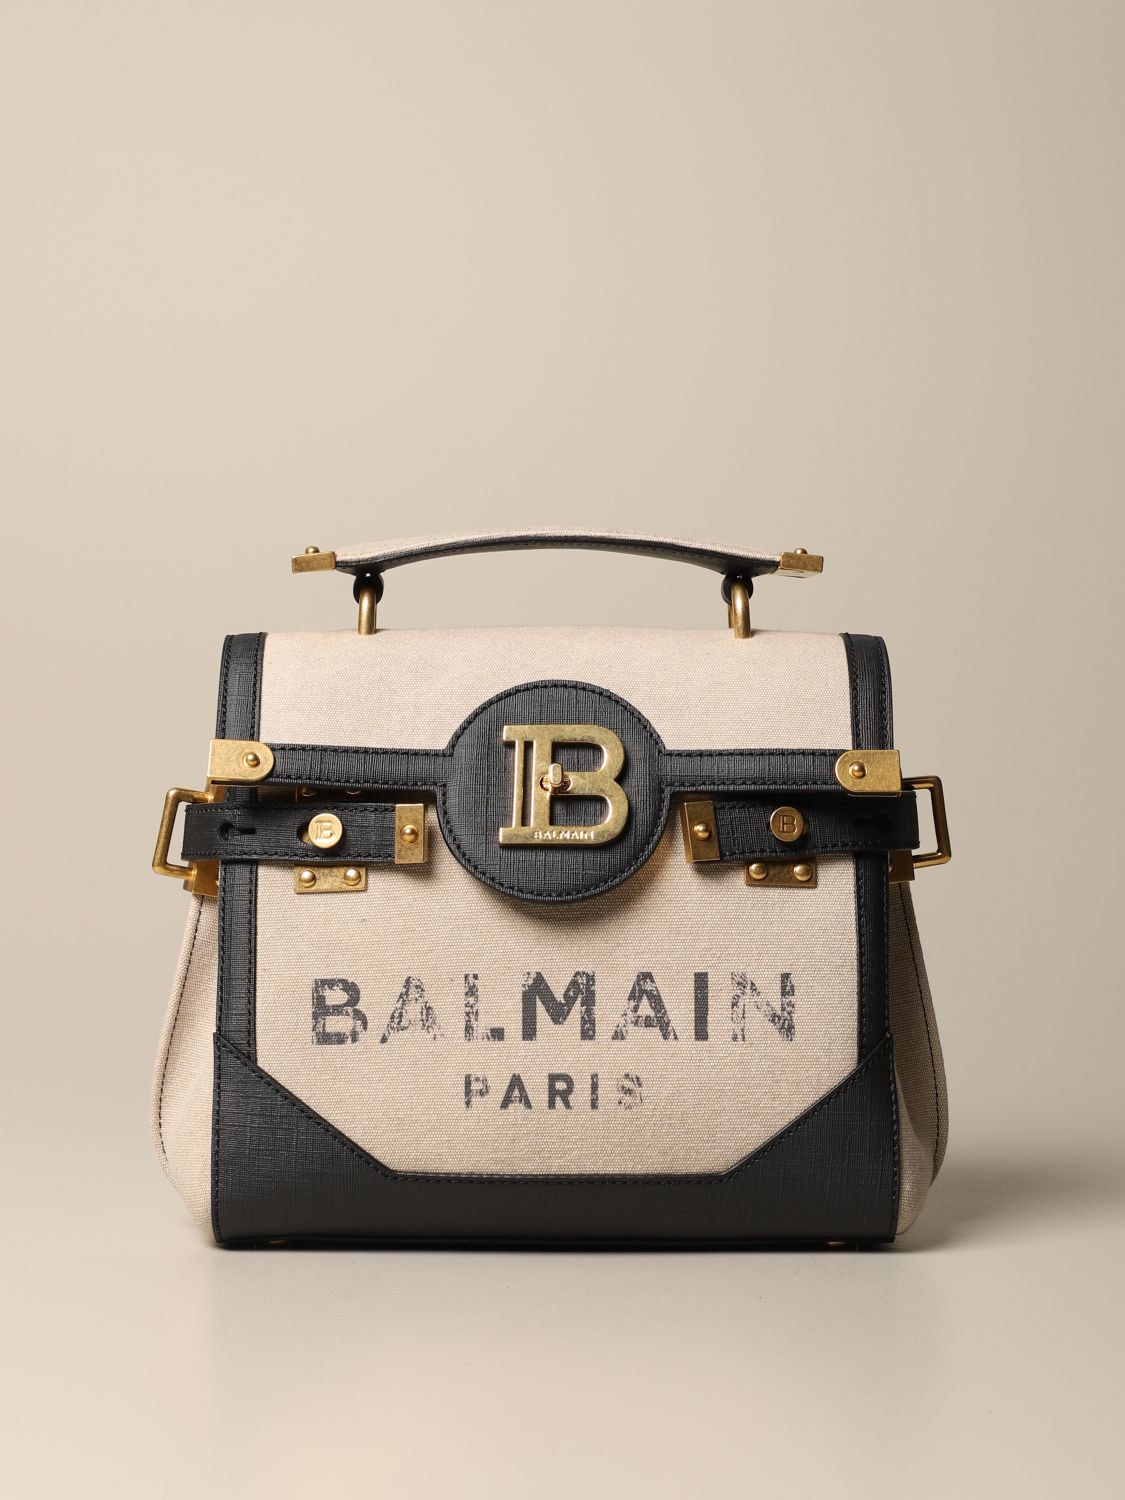 BALMAIN: B-Buzz 23 bag in canvas and leather - Black | Balmain handbag ...